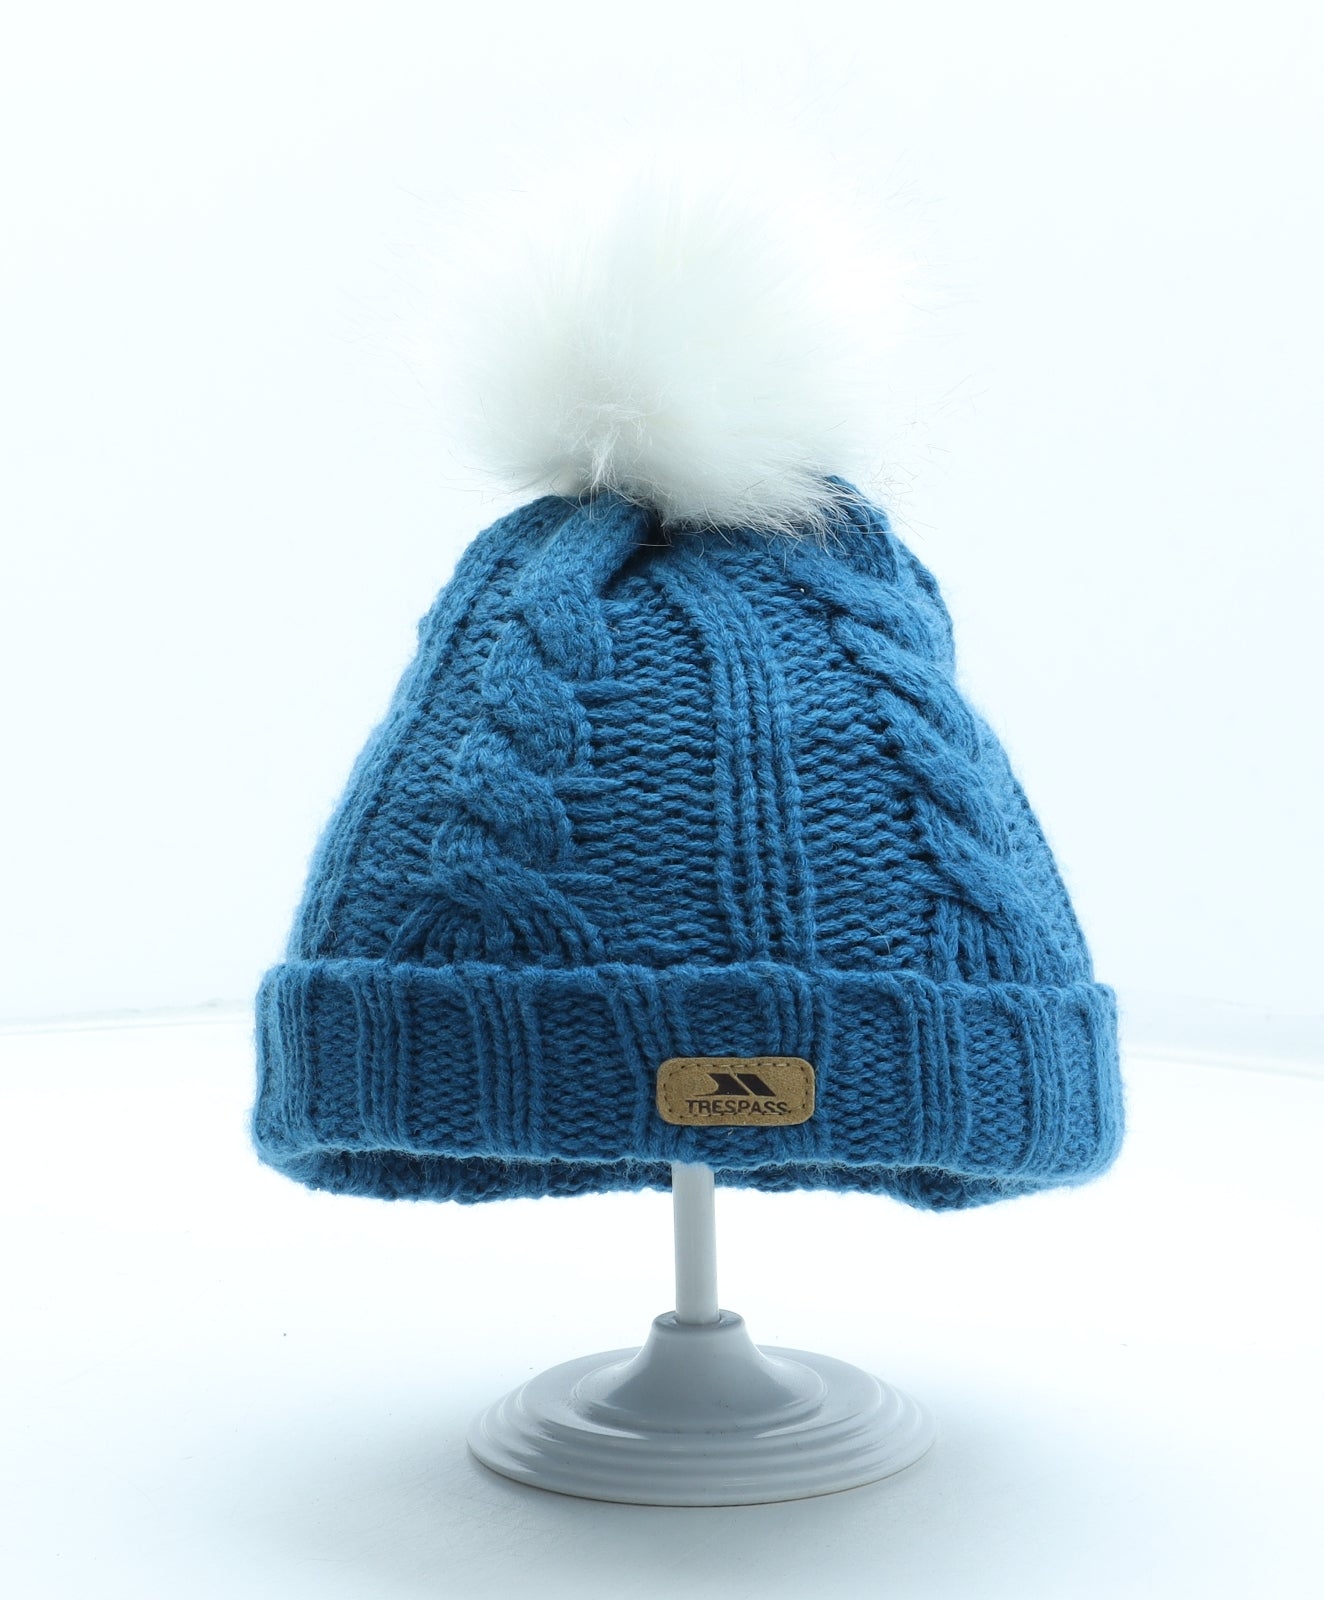 Trespass Boys Blue Acrylic Bobble Hat Size S - Size 2-4 Years